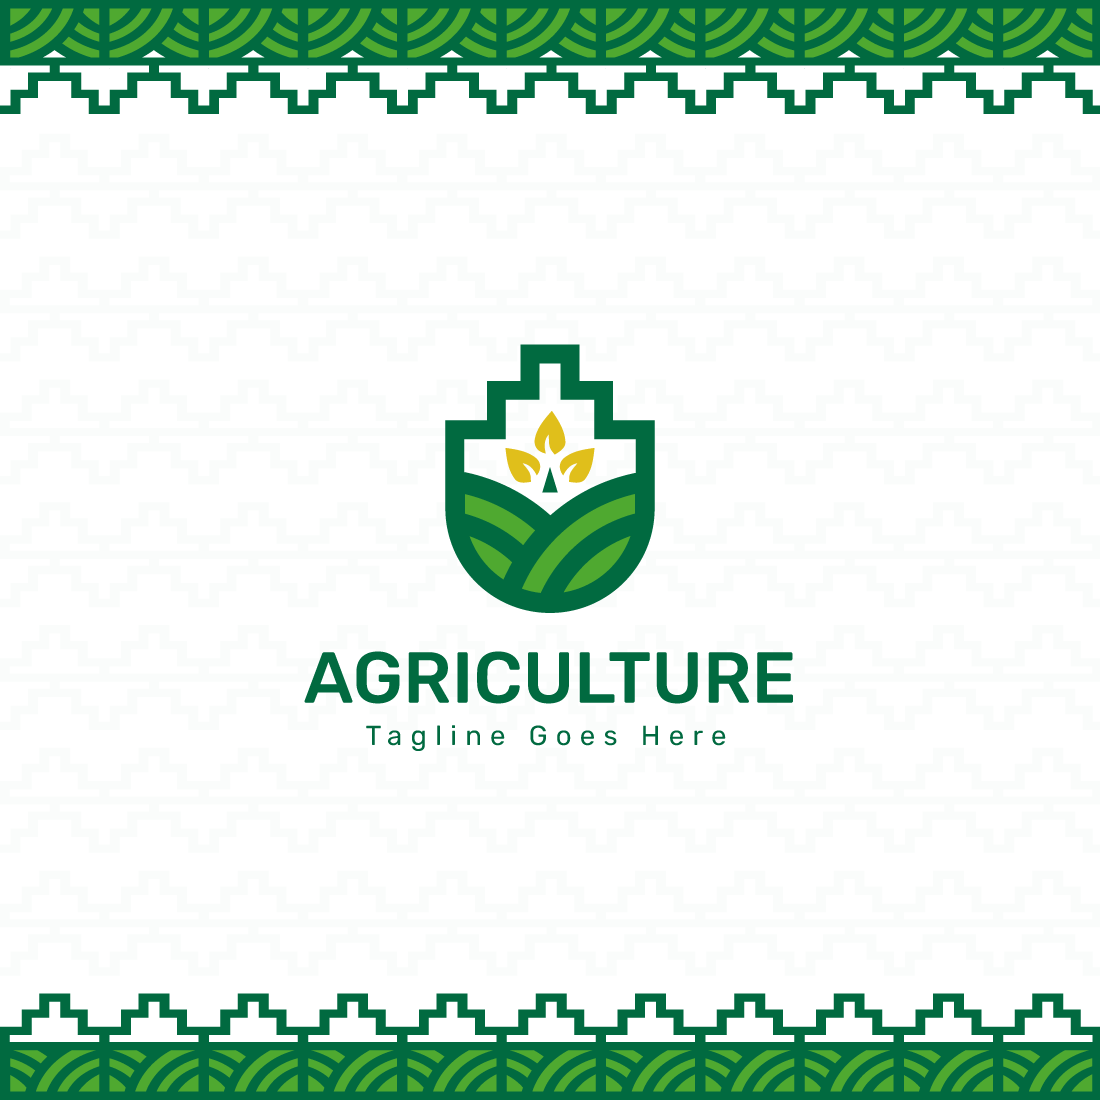 Agriculture | farmer | Wheat | Garden | Nursery - logo design template cover image.